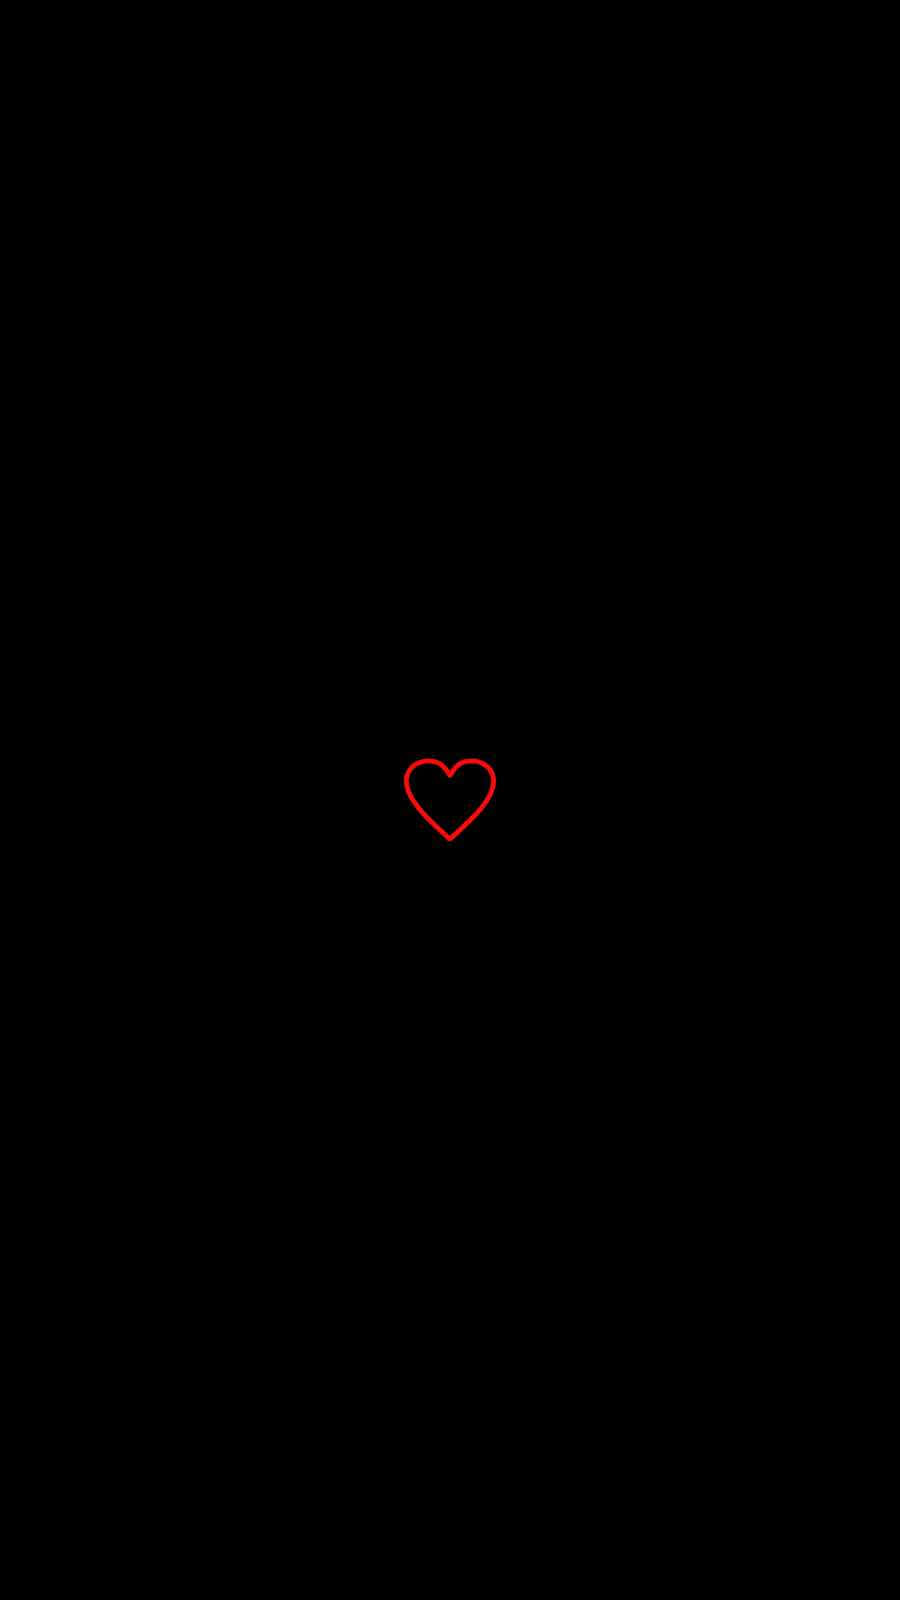 Heart Black Instagram Vector Images over 480